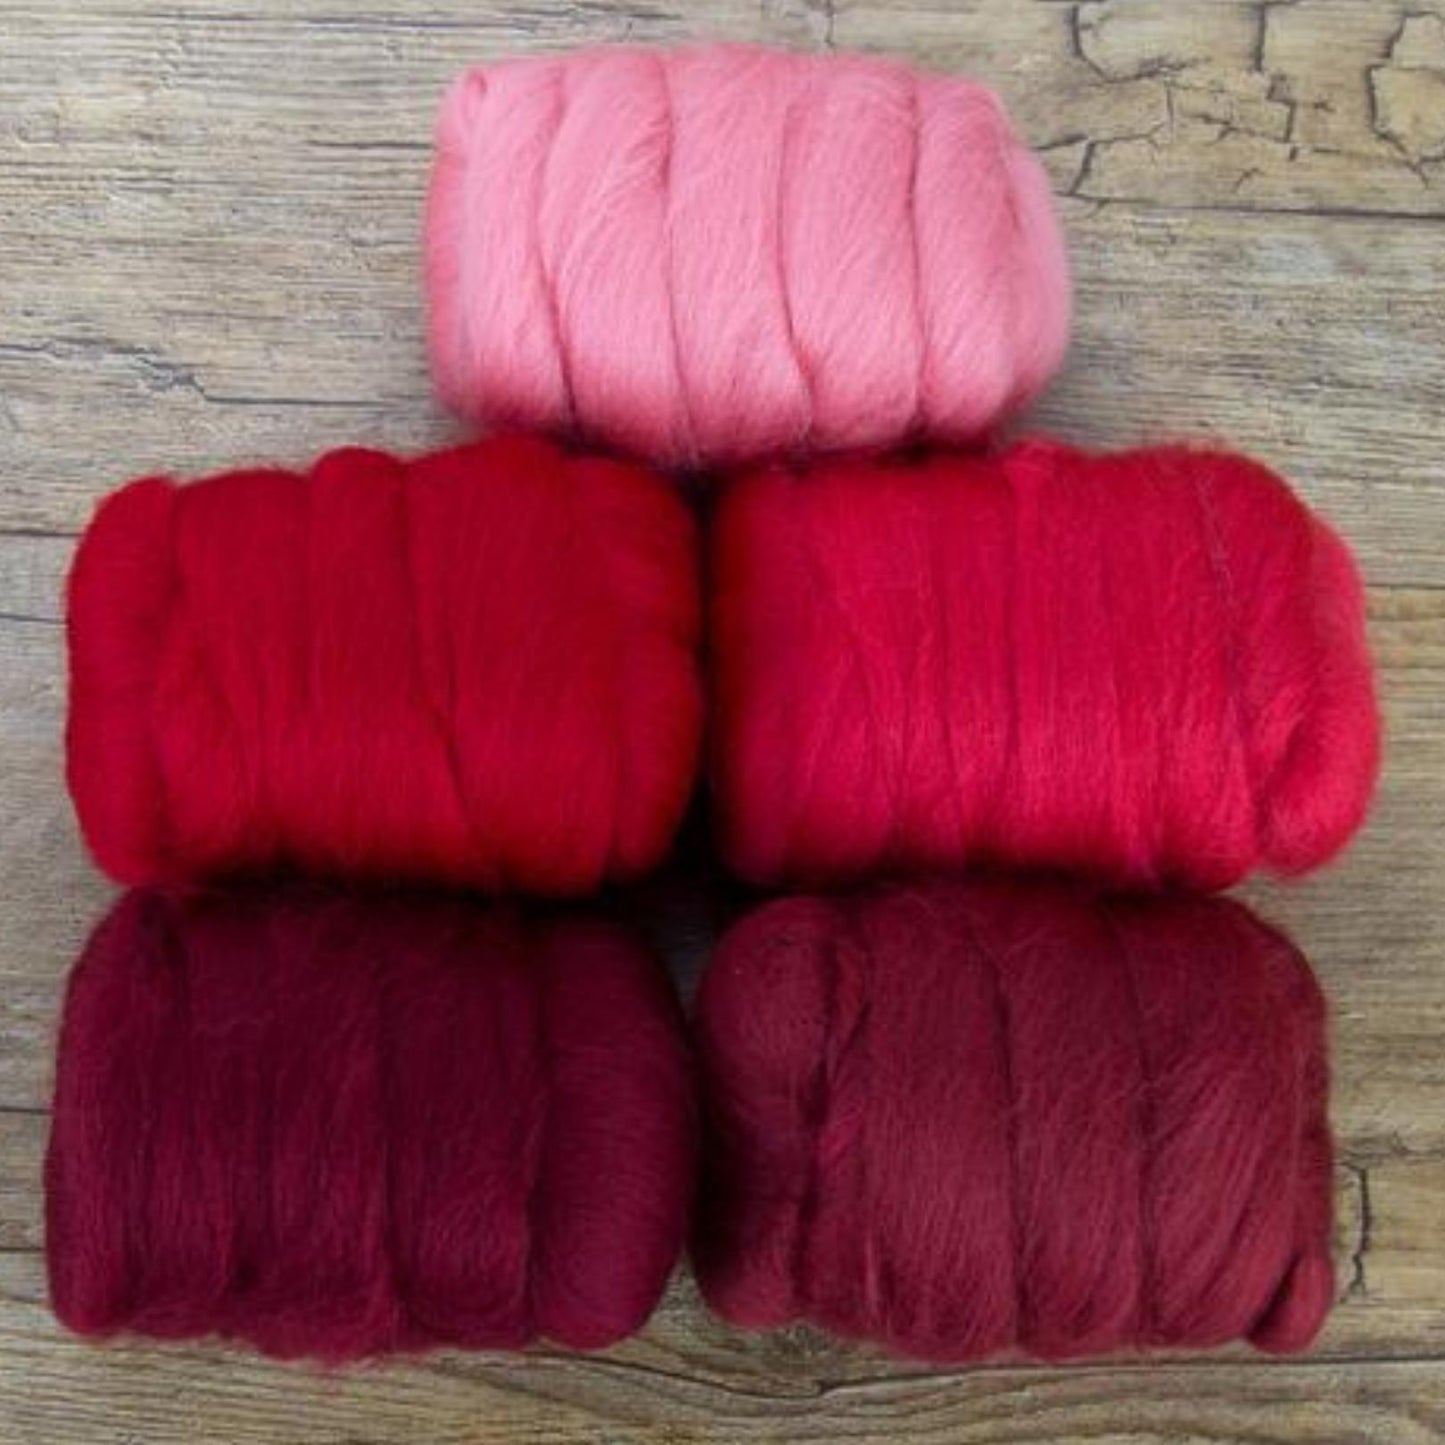 Mixed Merino Wool Variety Pack | Wondrous Reds (Reds) 250 Grams, 23 Micron